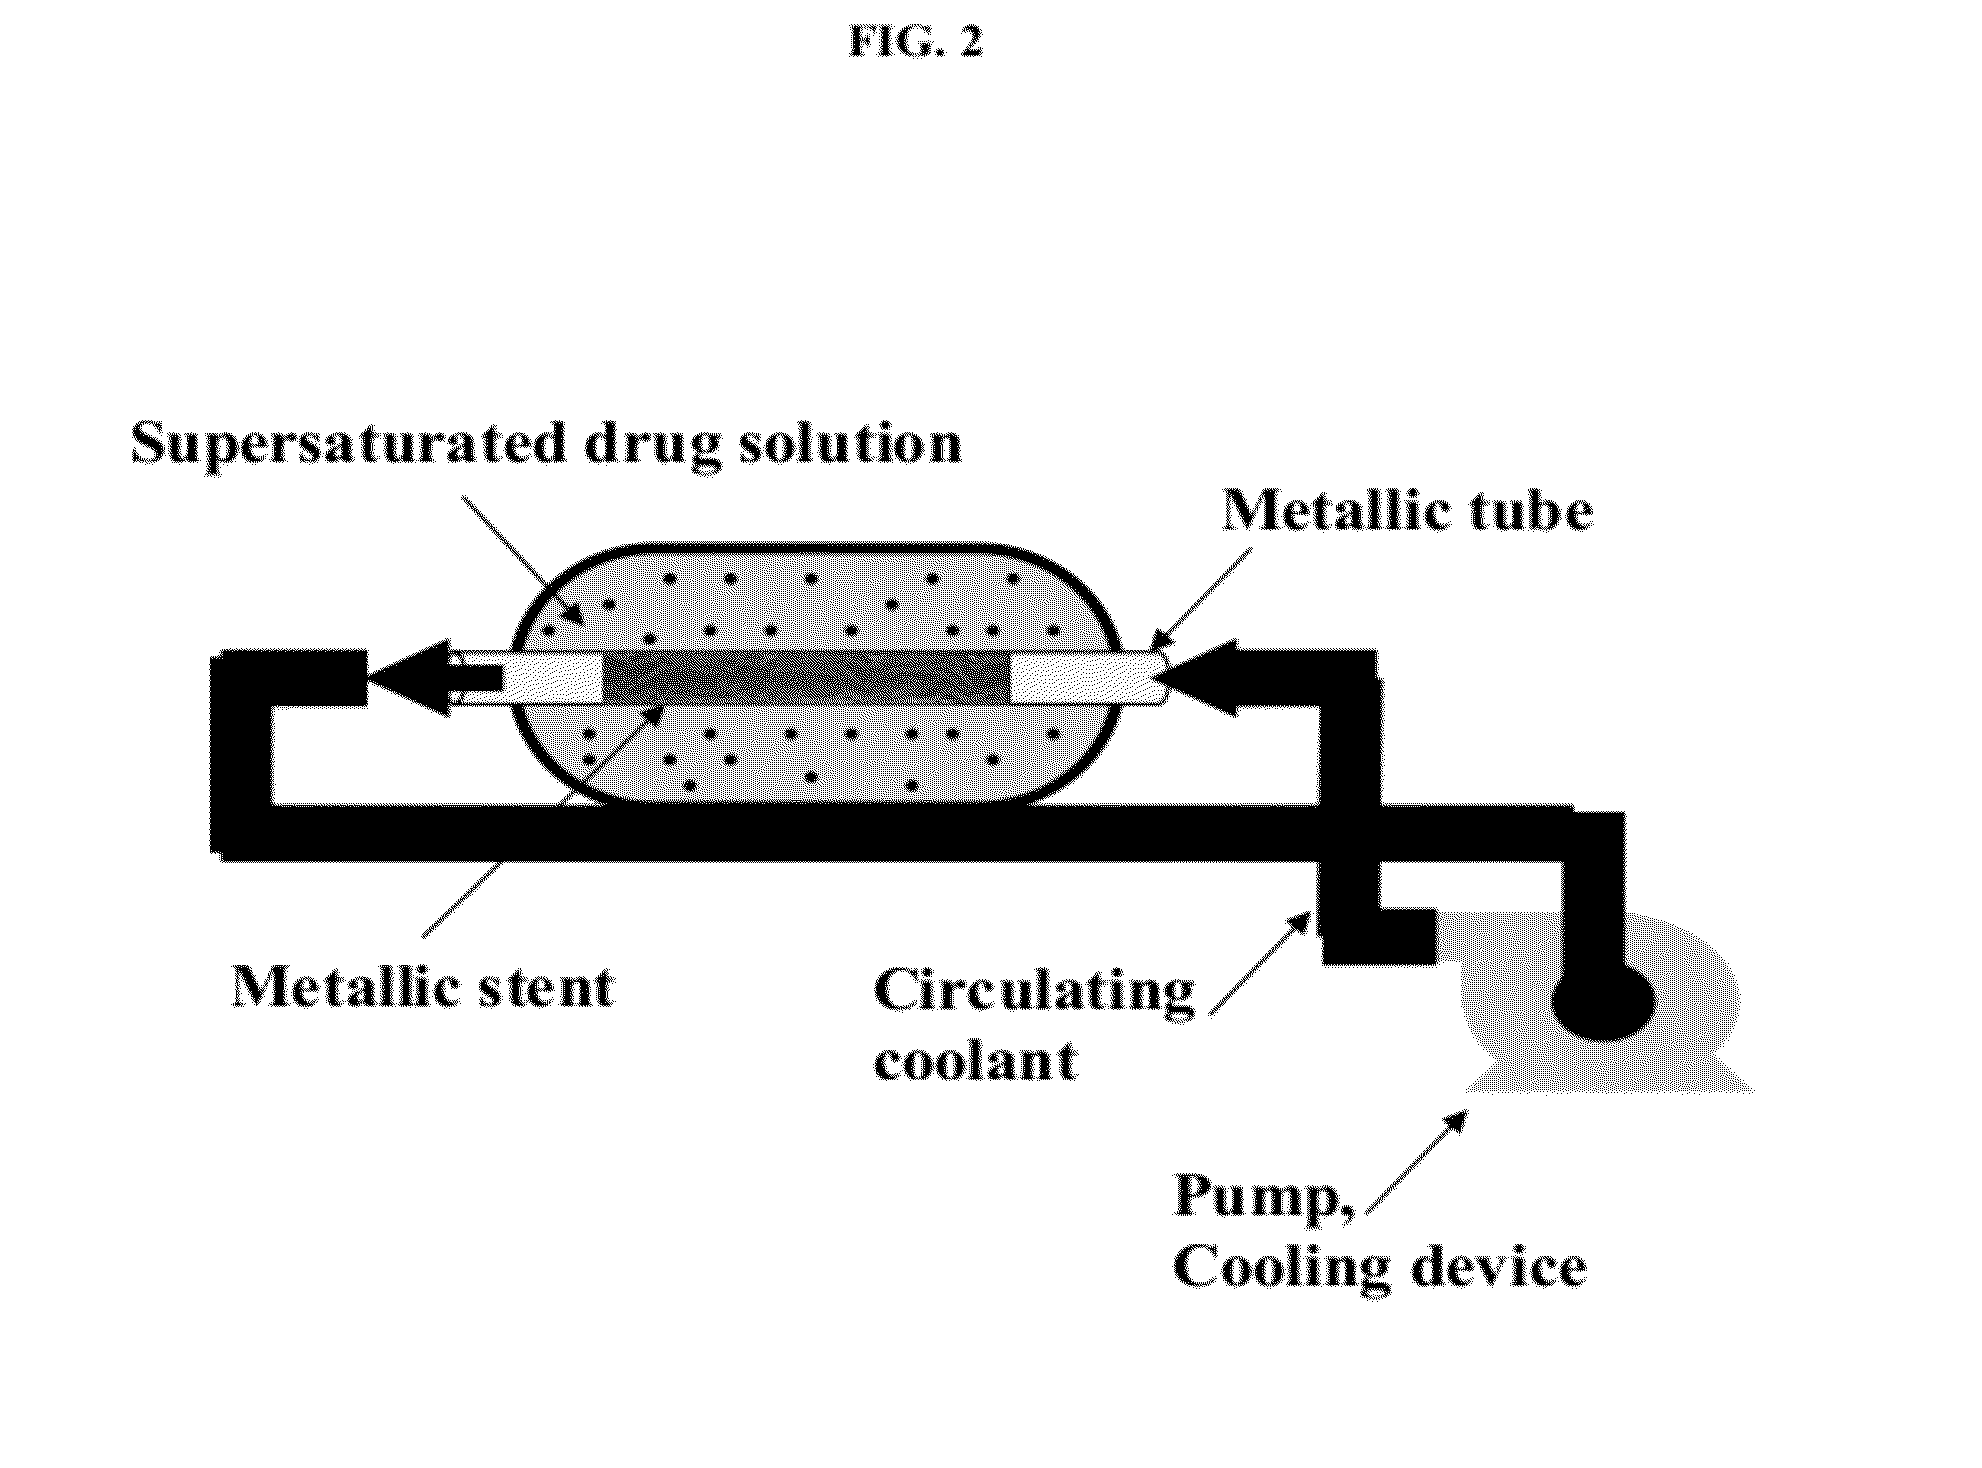 Crystalline drug-containing coatings